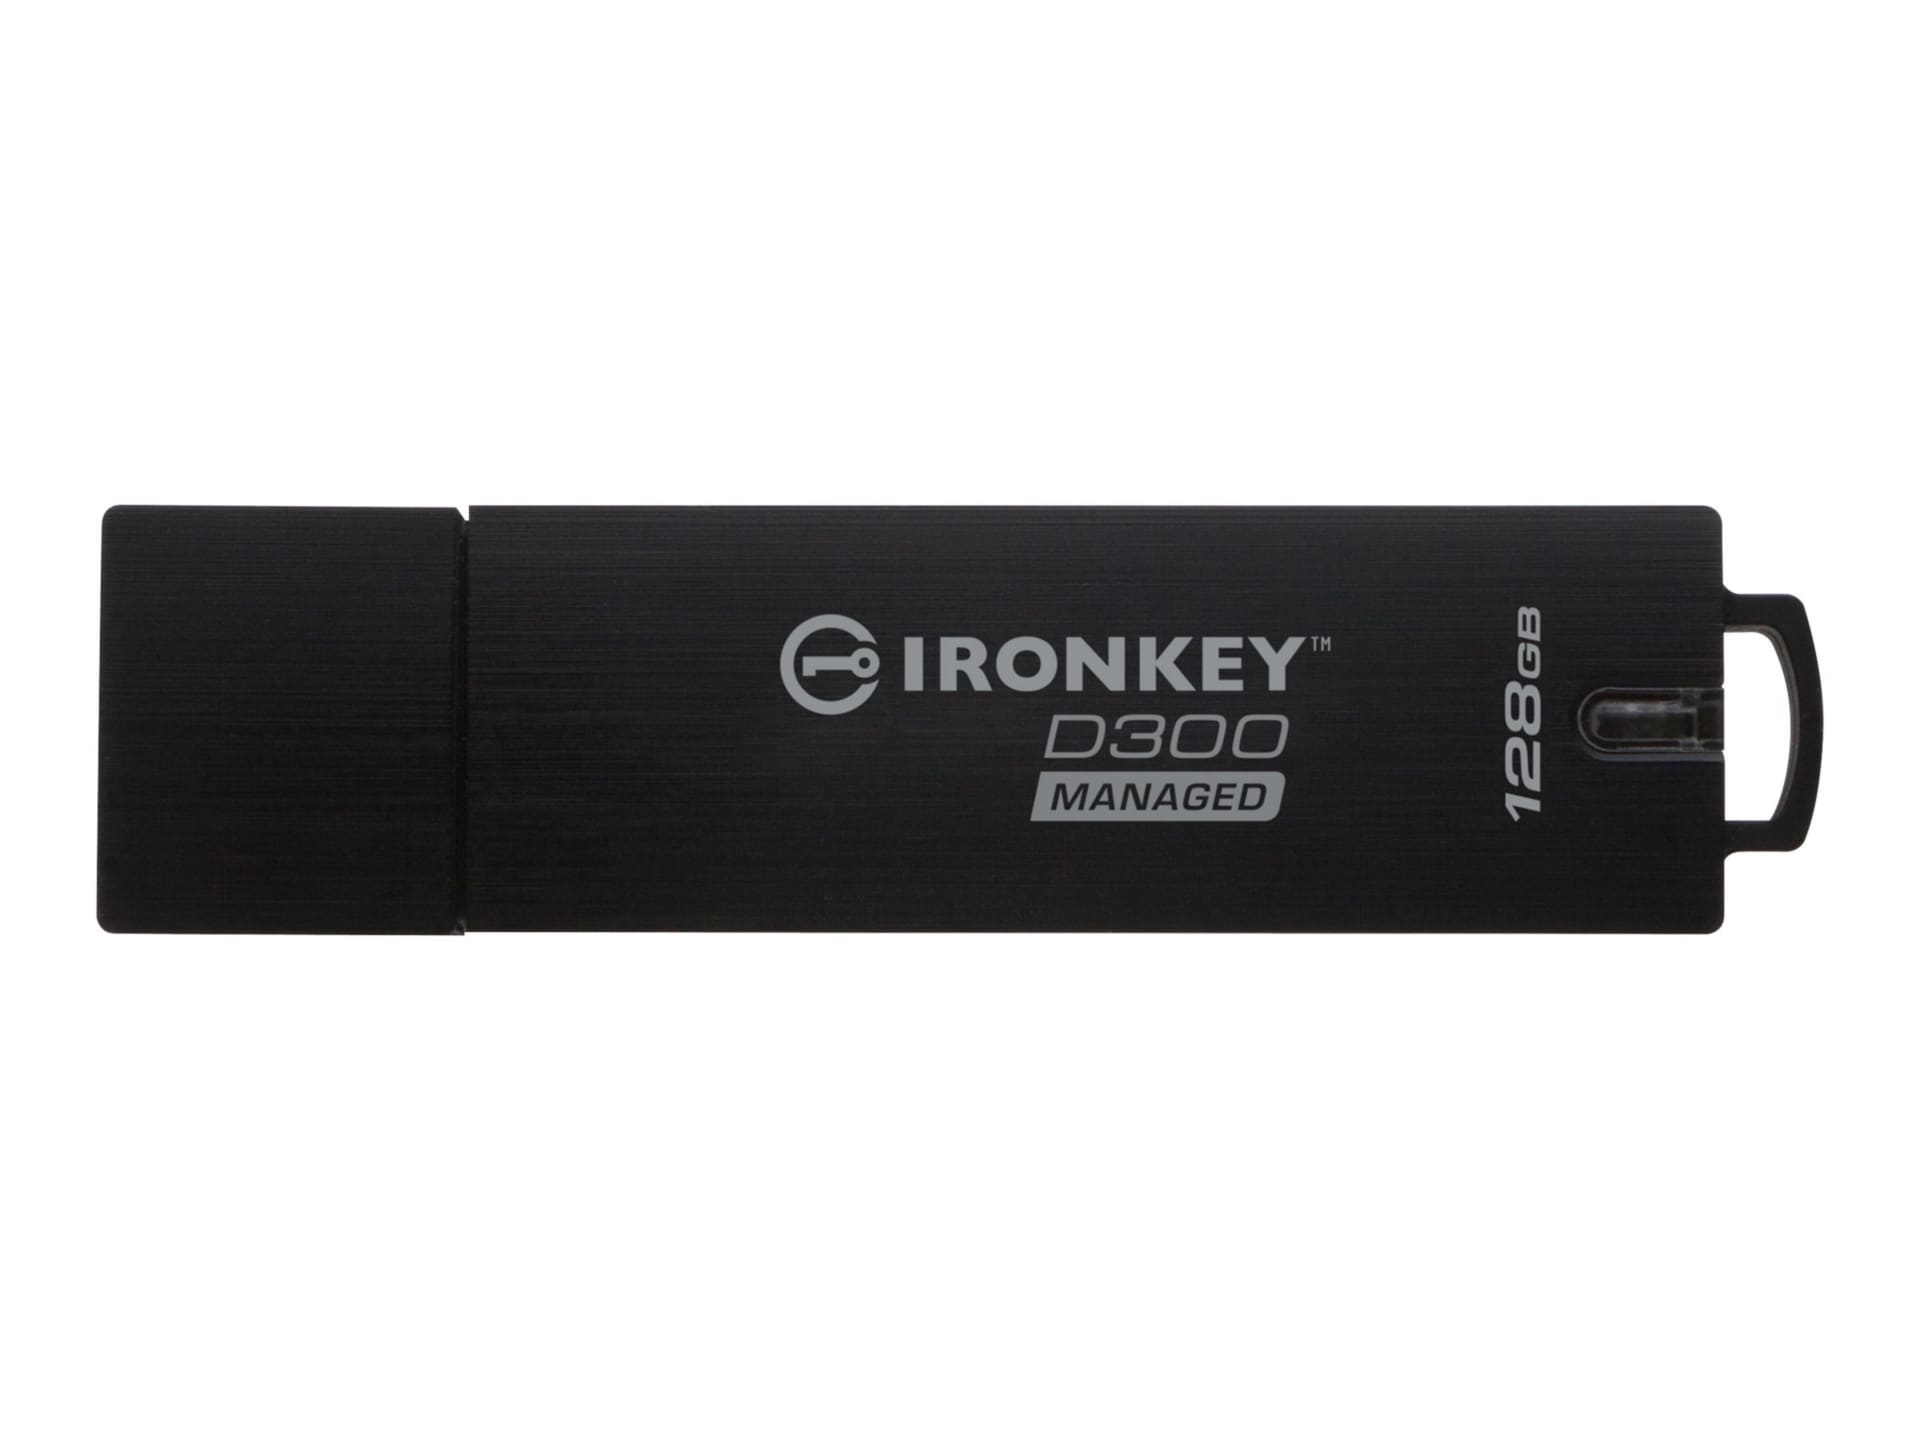 IronKey D300 Managed - USB flash drive - 128 GB